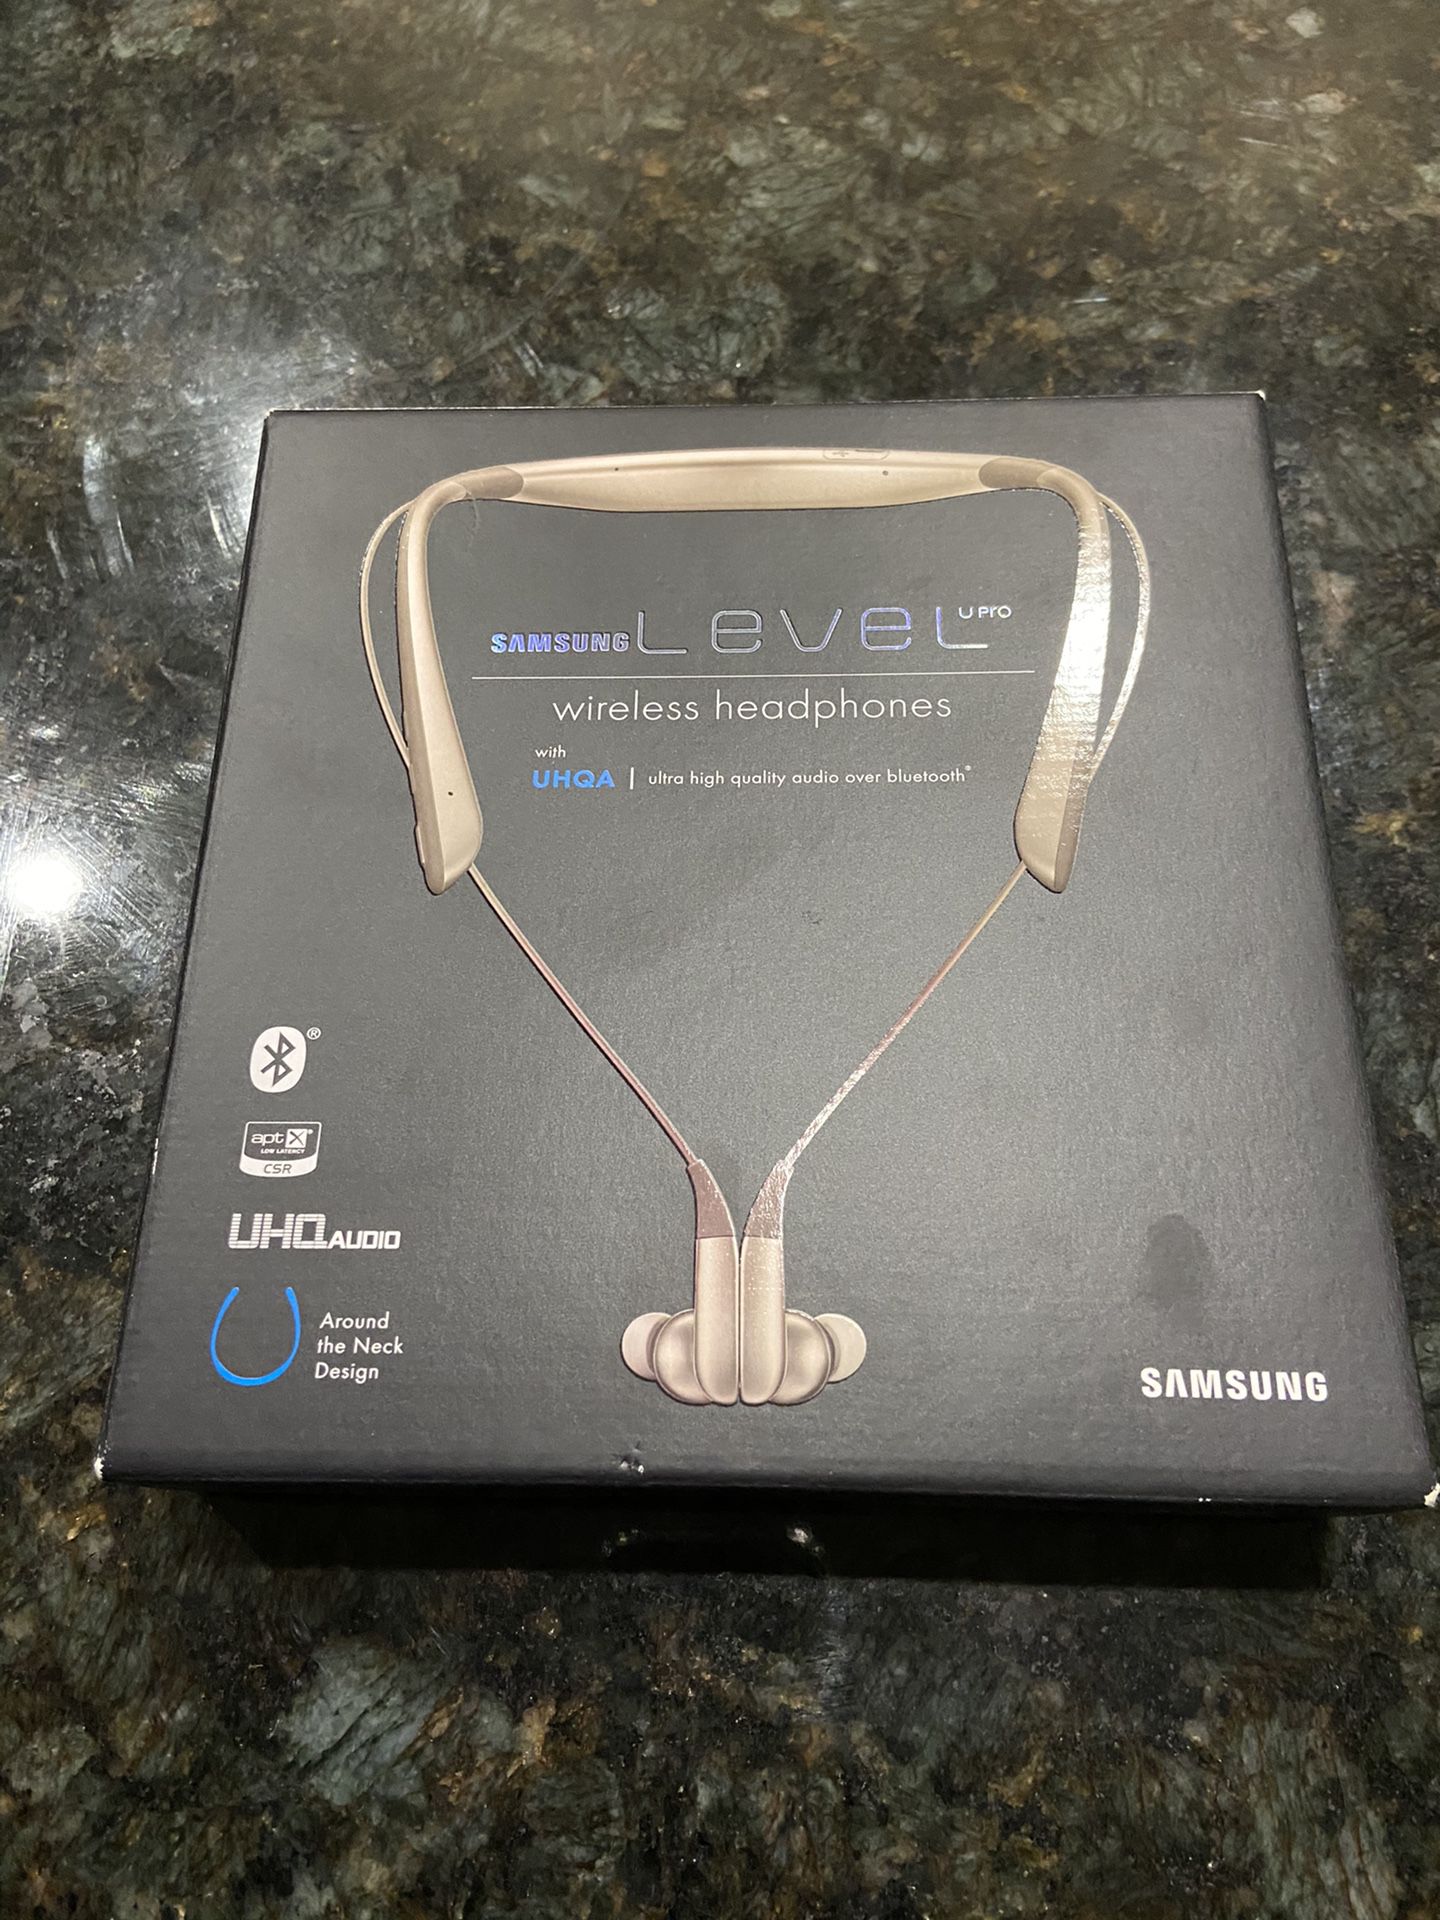 New in box Samsung Level U Pro Bluetooth headphones